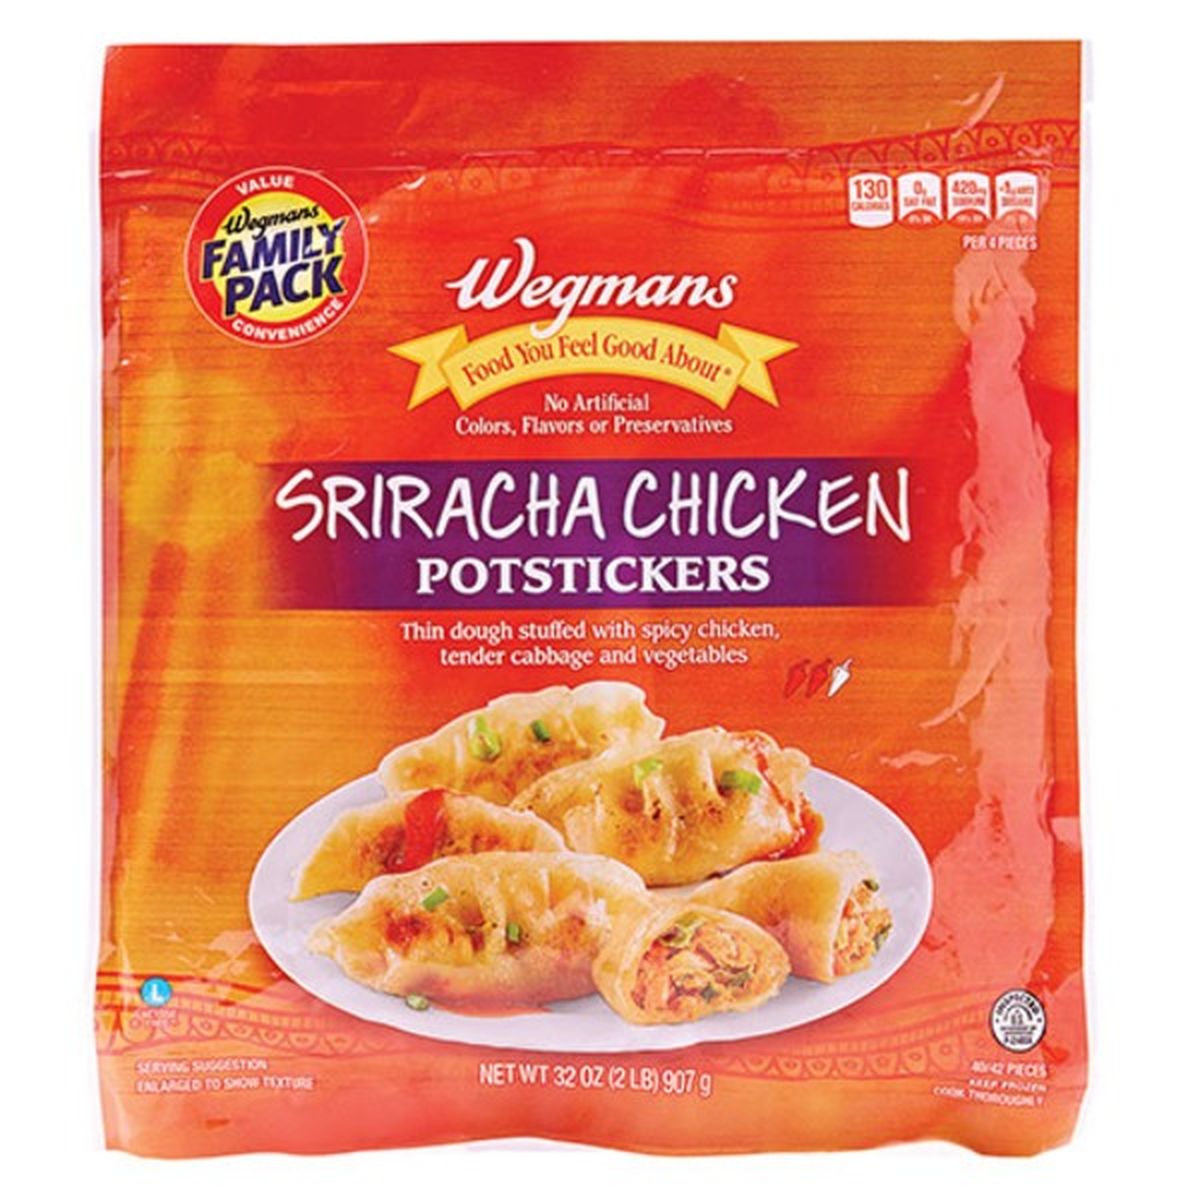 Calories in Wegmans Sriracha Chicken Potstickers, FAMILY PACK